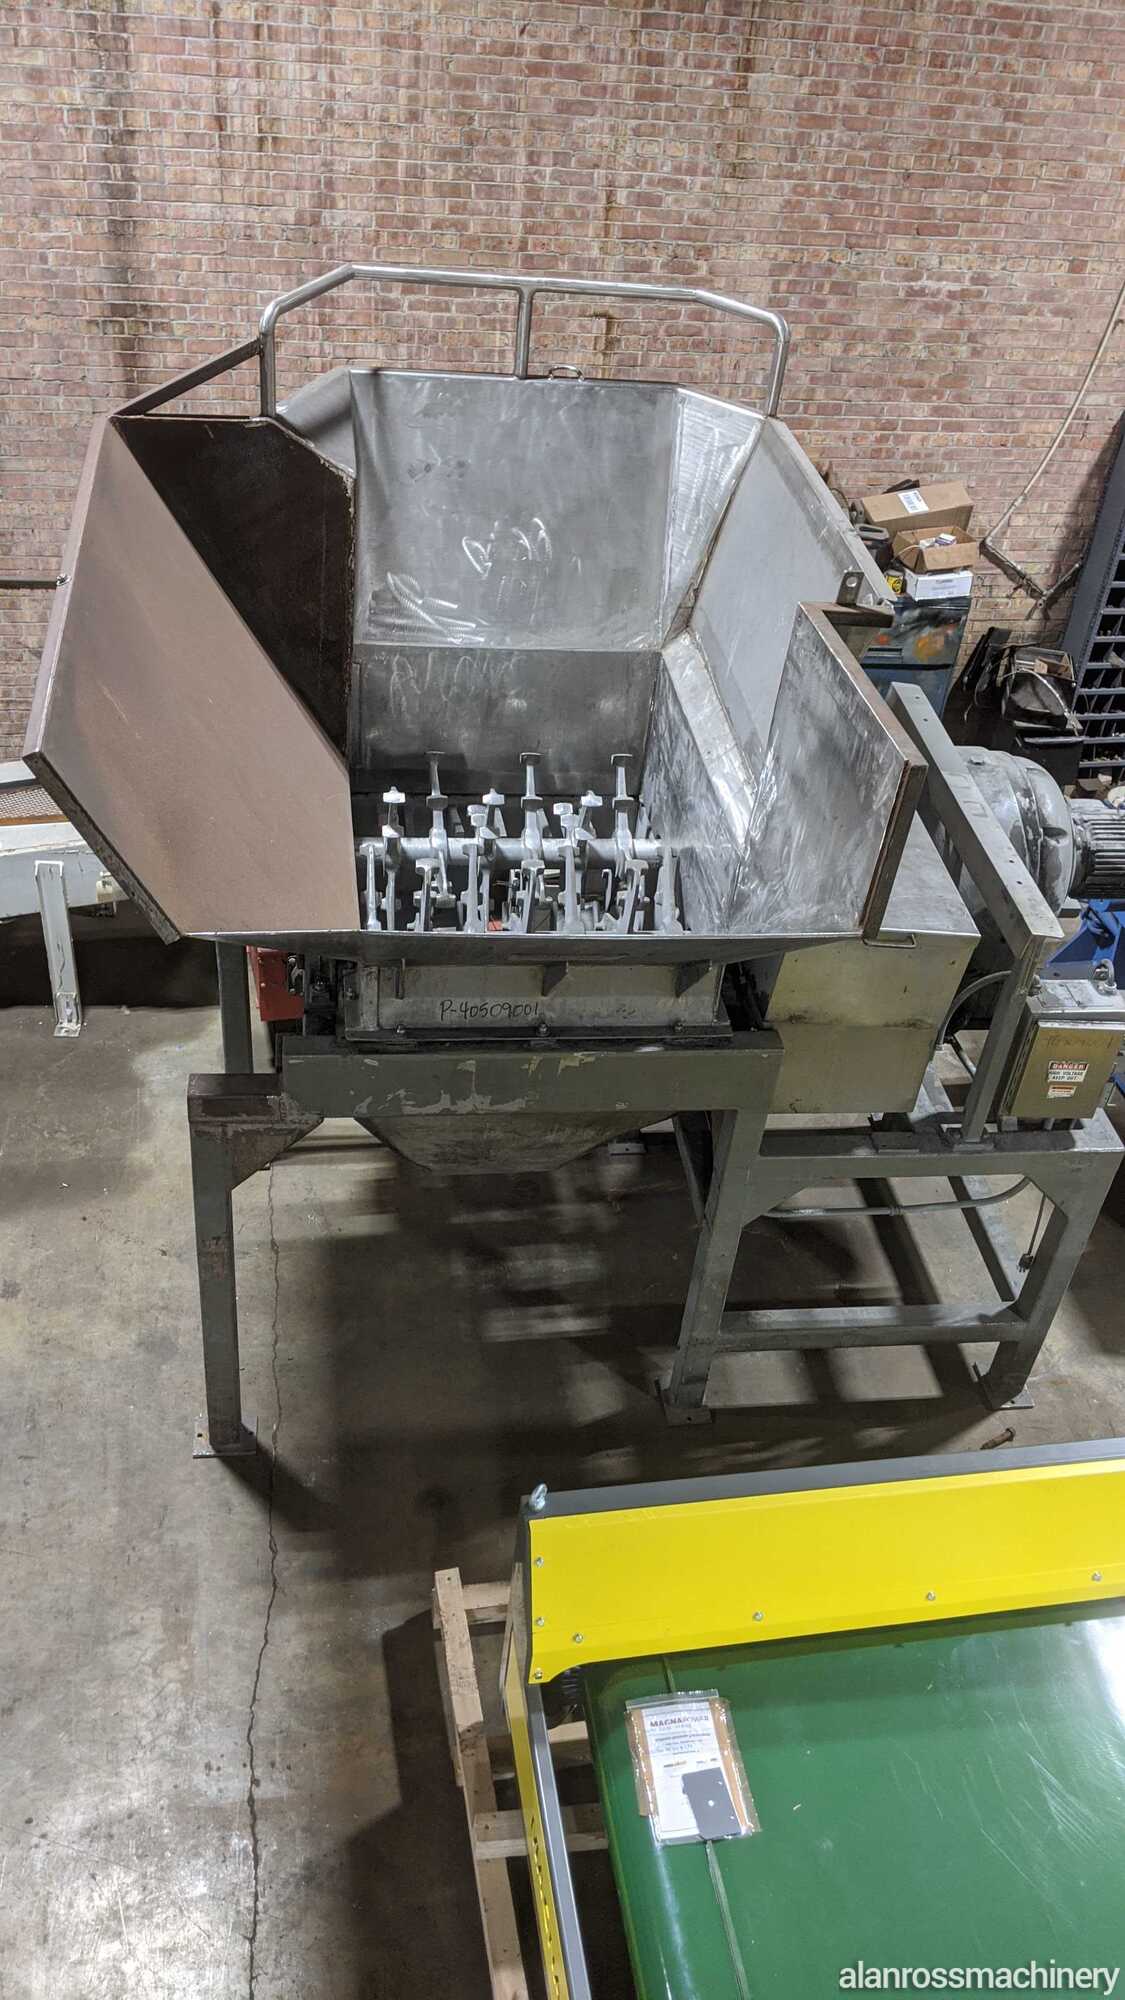 CUSTOM BUILT 15HP Shredders | Alan Ross Machinery